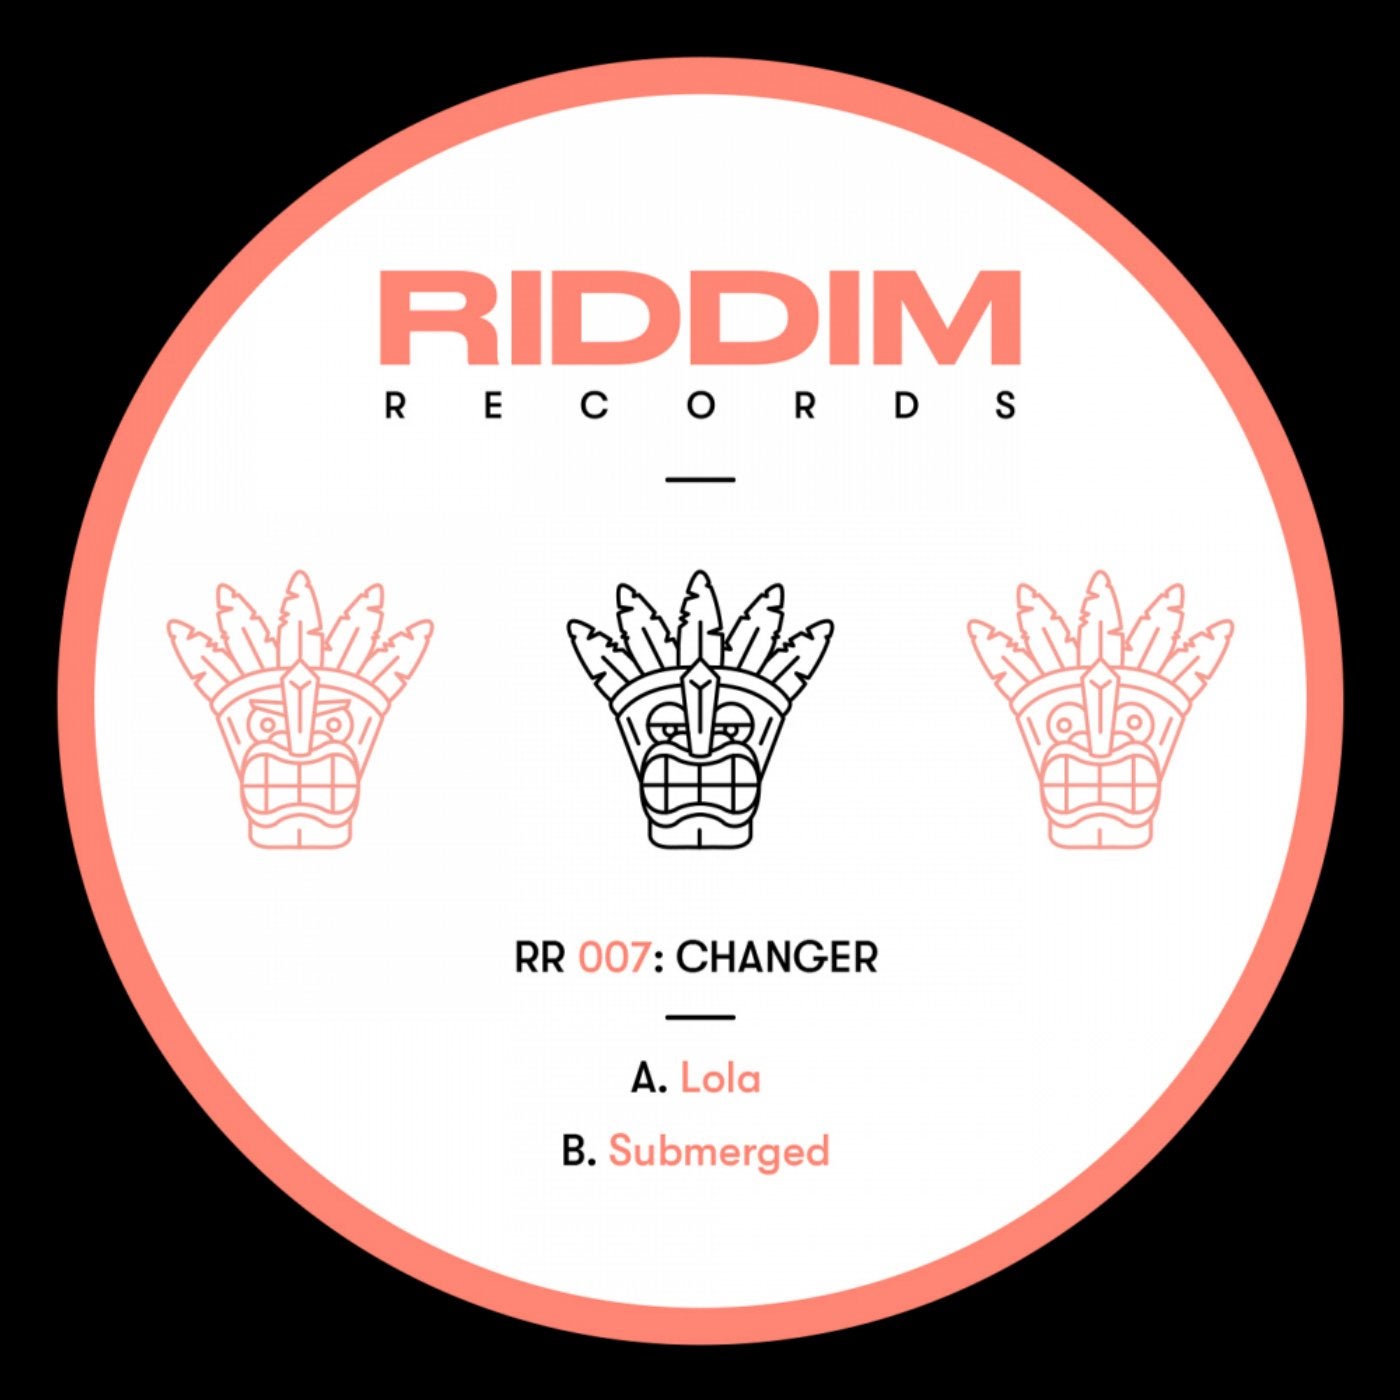 Riddim Records artists  music download - Beatport